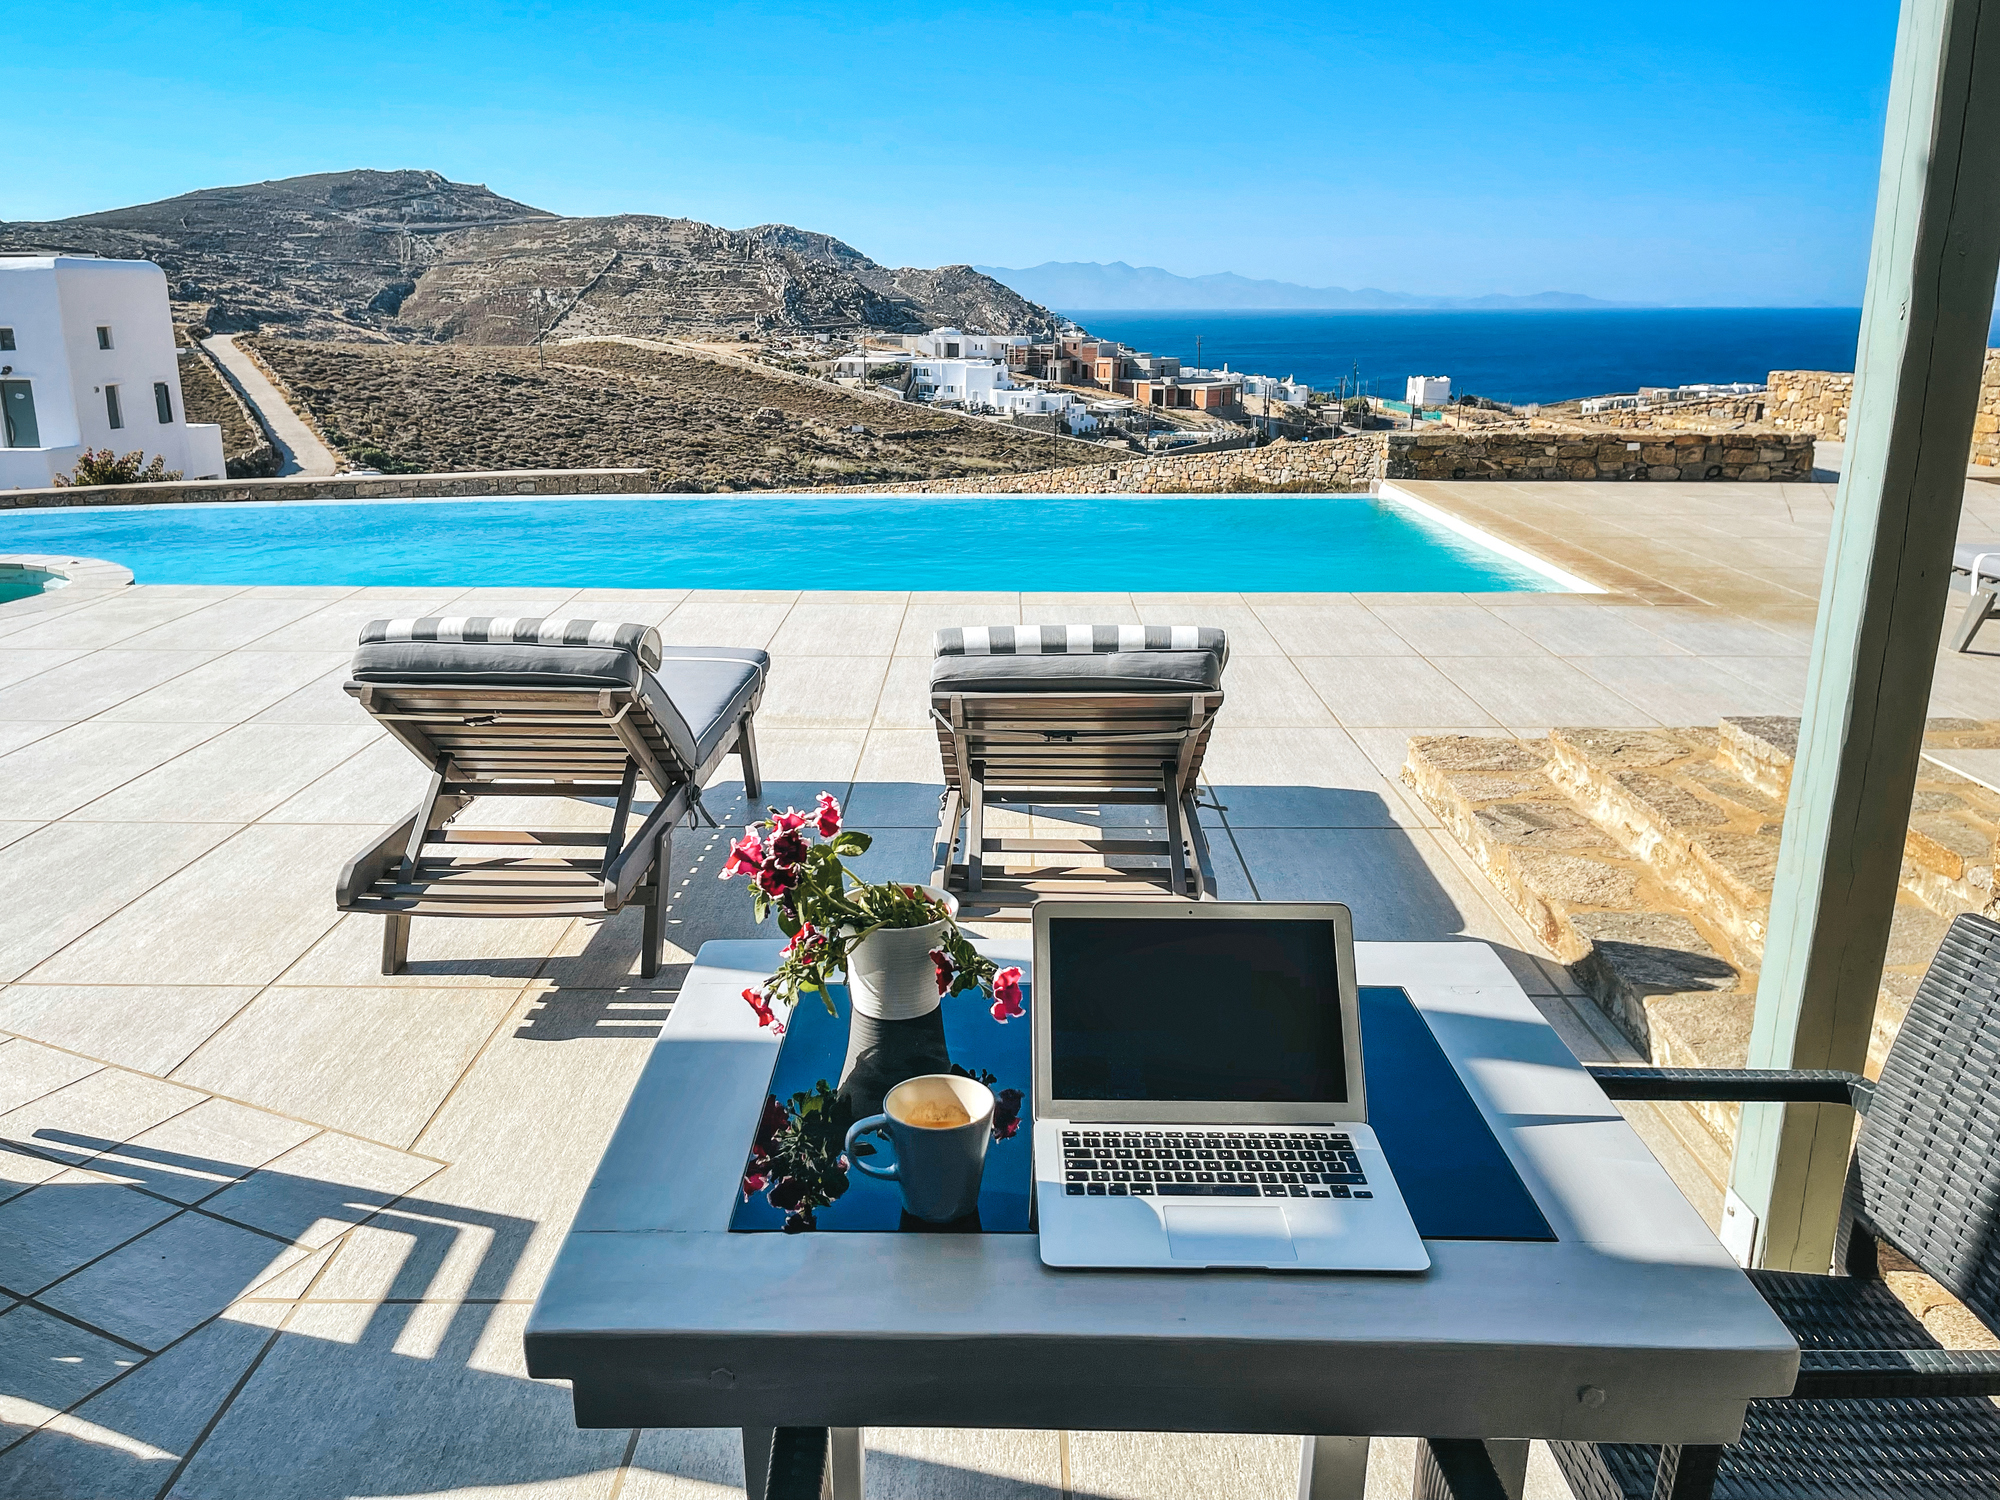 Thanos Hotels and Resorts: Την πιο δυναμική είσοδο στην ελληνική αγορά ανακοίνωσε ο κυπριακός ξενοδοχειακός όμιλος